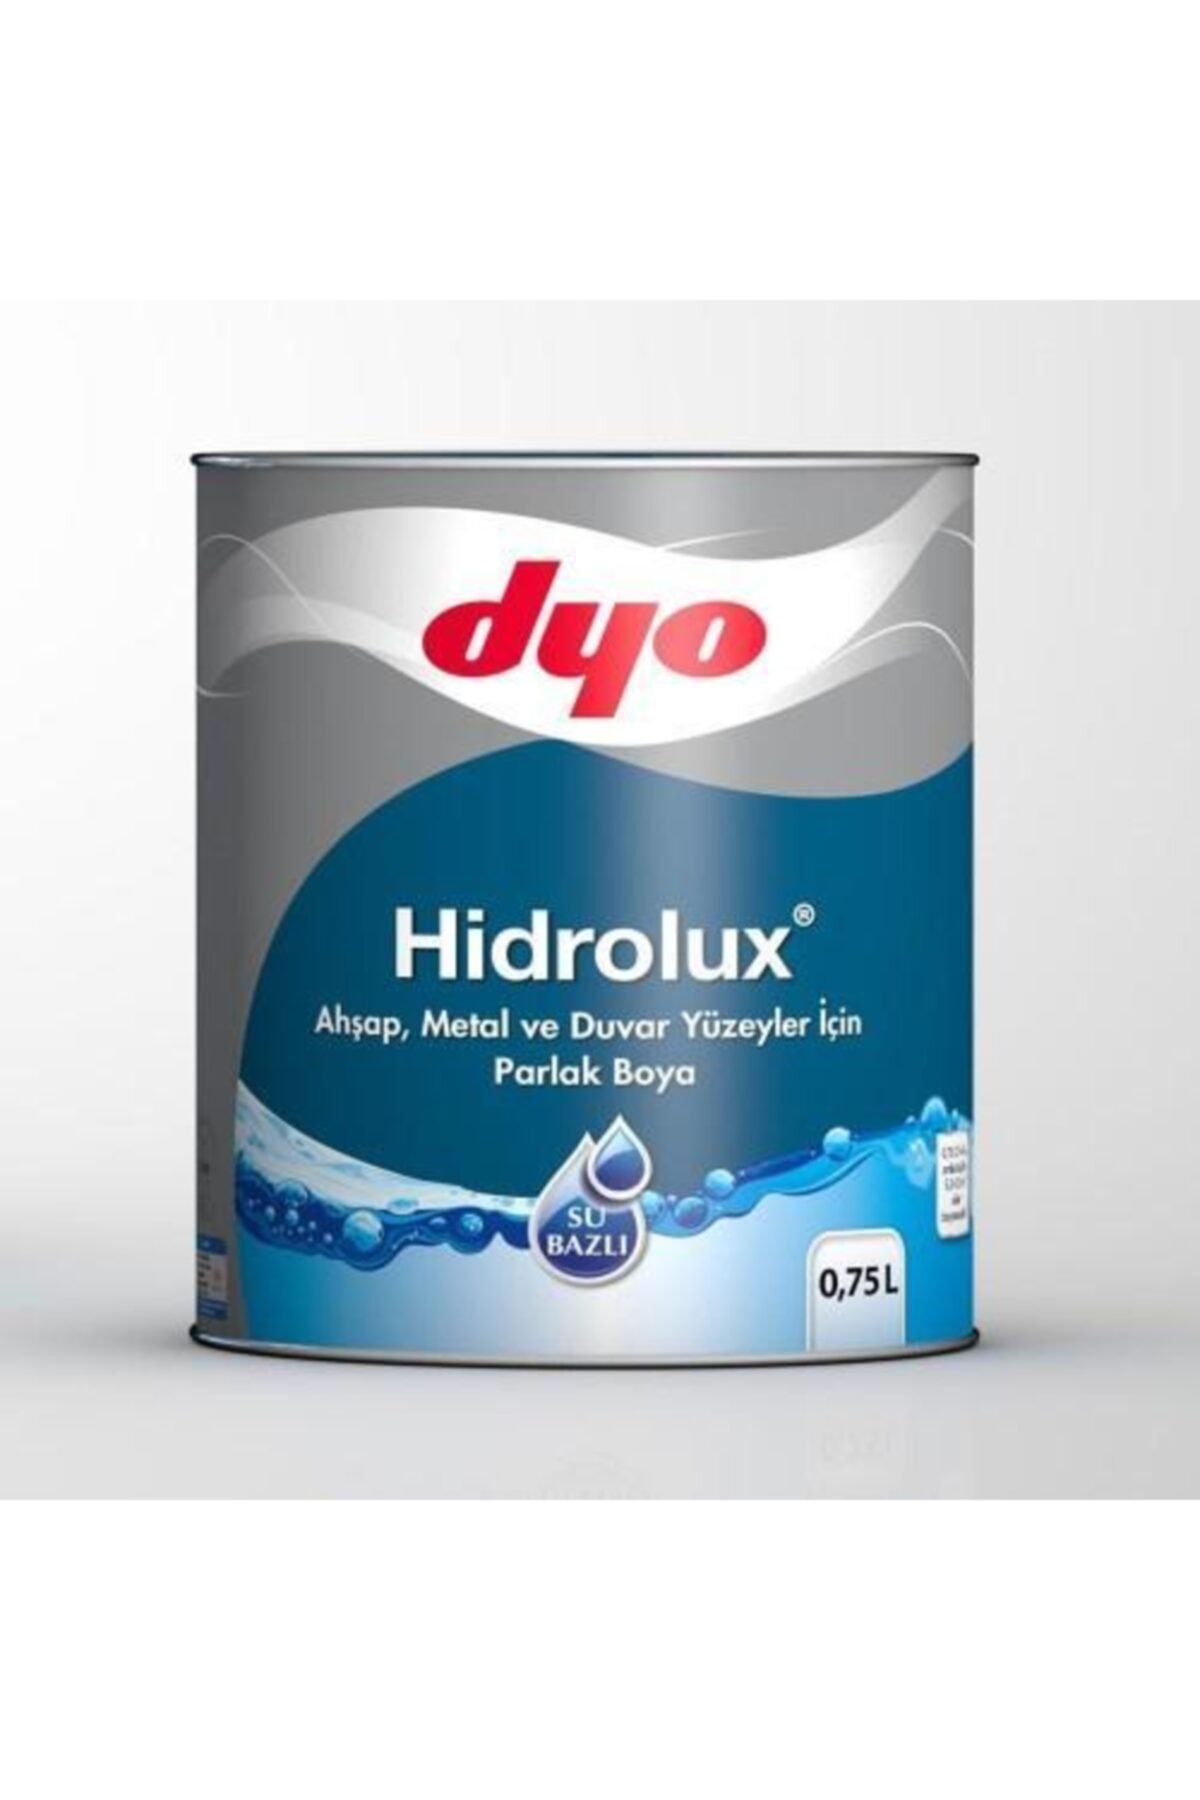 Dyo Hidrolüx Su Bazlı Kokusuz Ahşap Ve Metal Boyası 0.75 Lt 7676 Alüminyum Gri